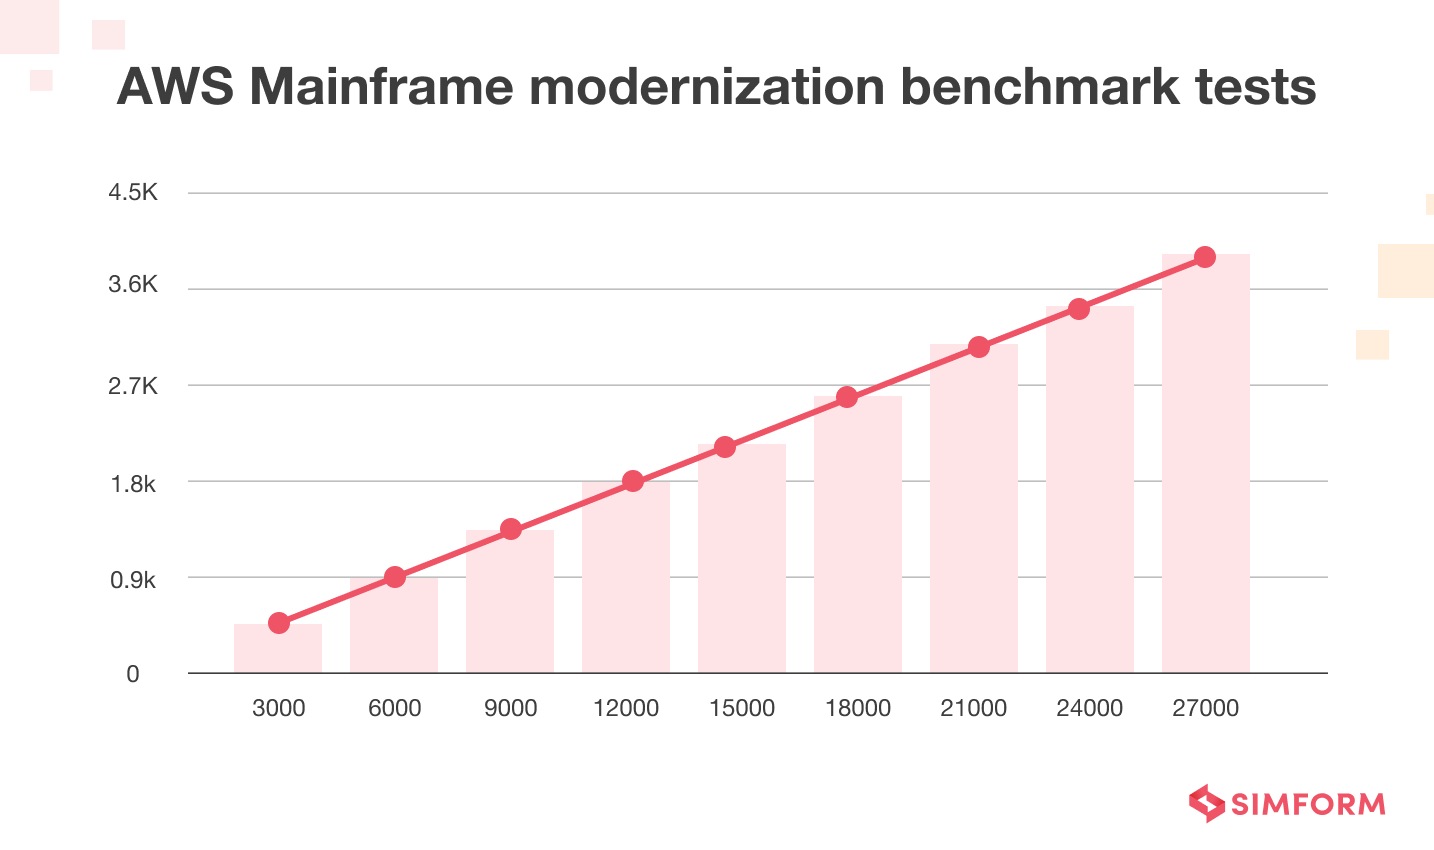 Modernization performance measurement